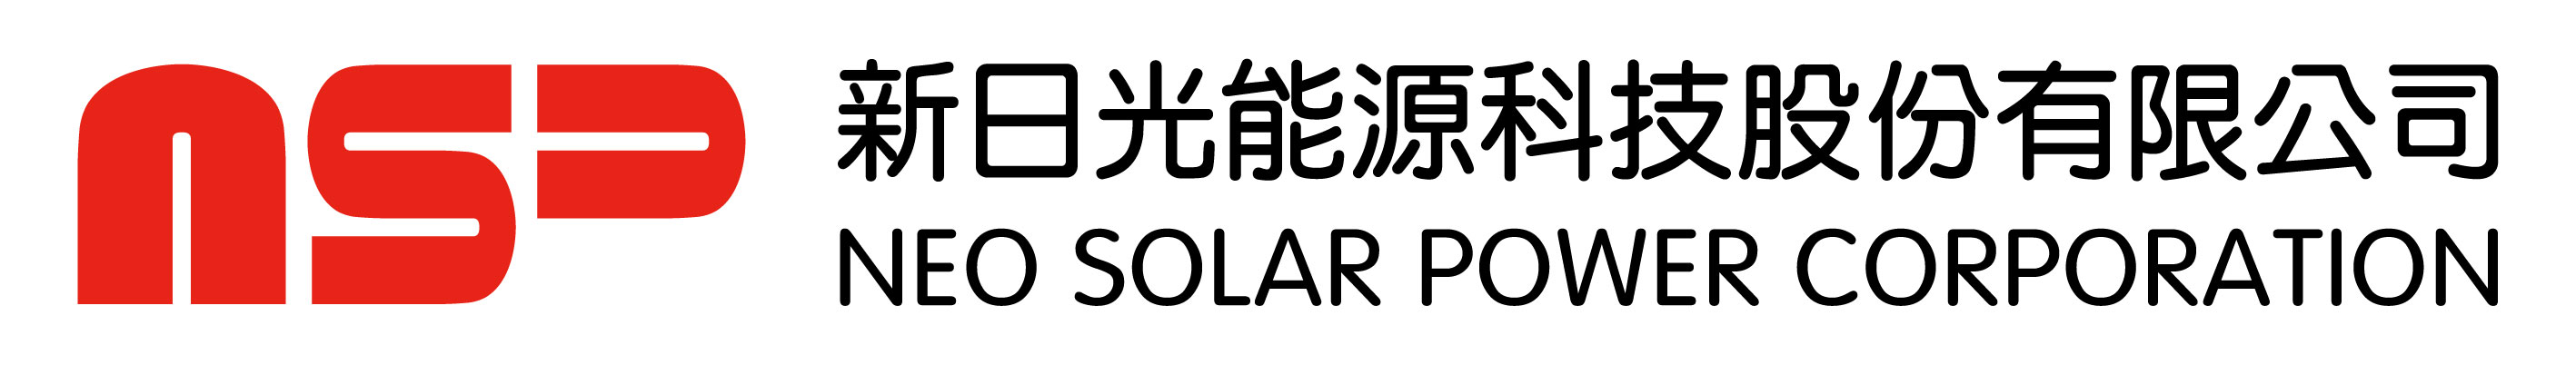 Neo Solar Power Corporation (NSP)